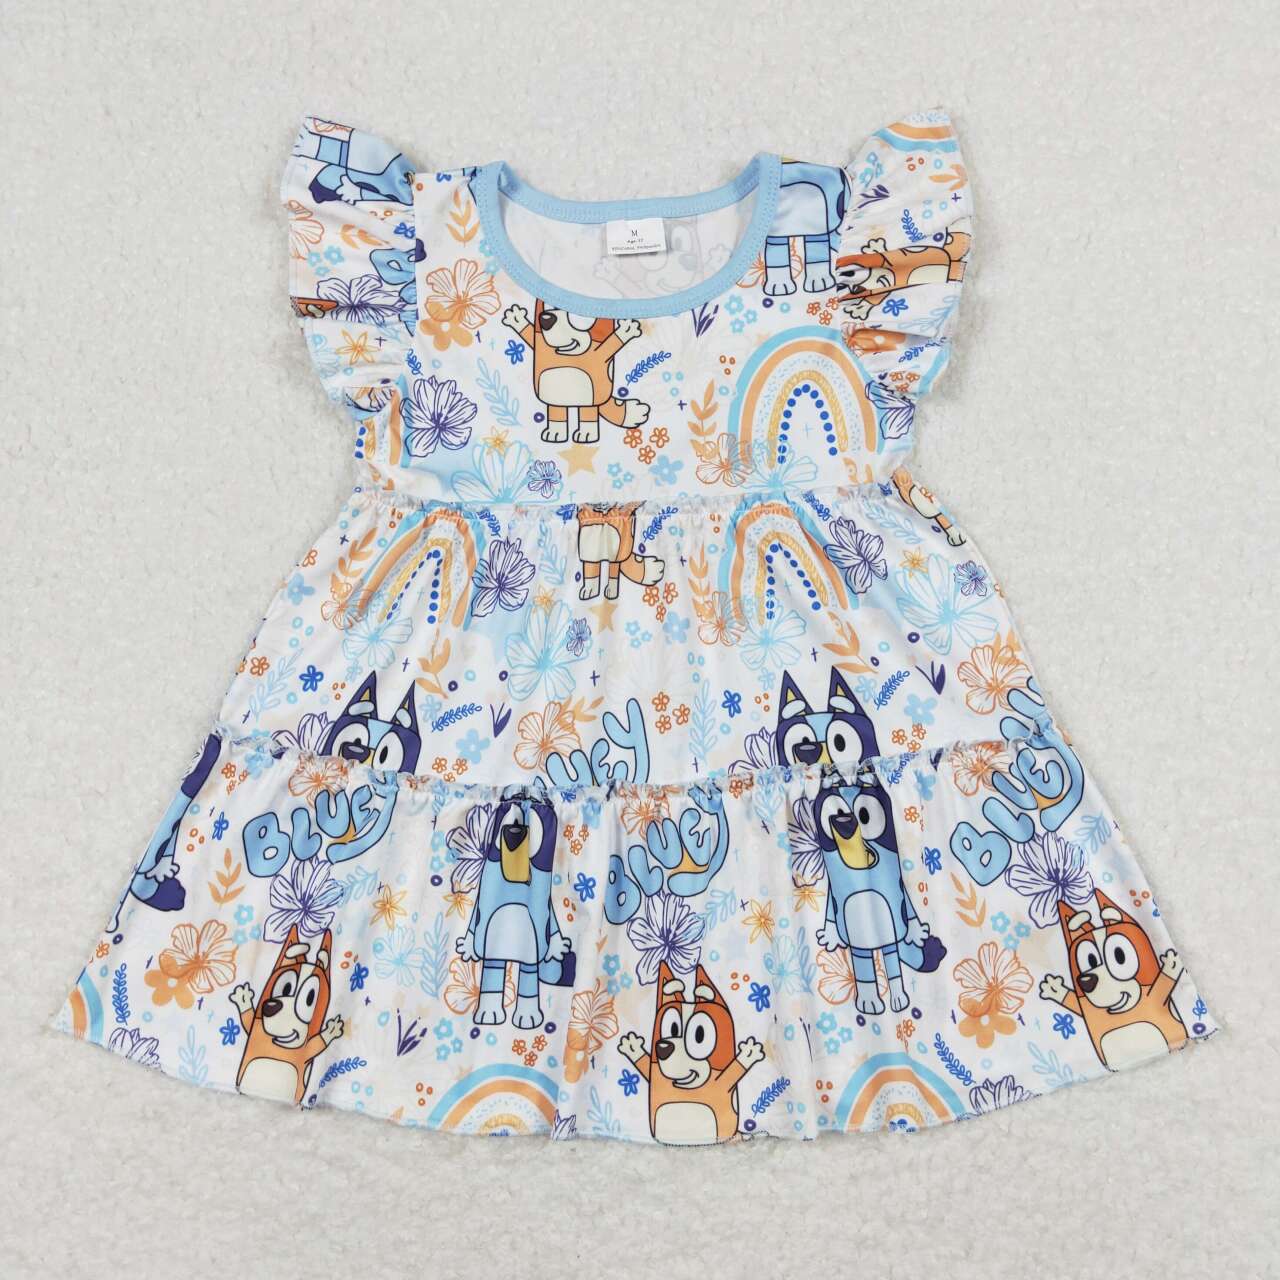 GSSO0635 Cartoon Dog Top Blue Shorts Girls Summer Clothes Set